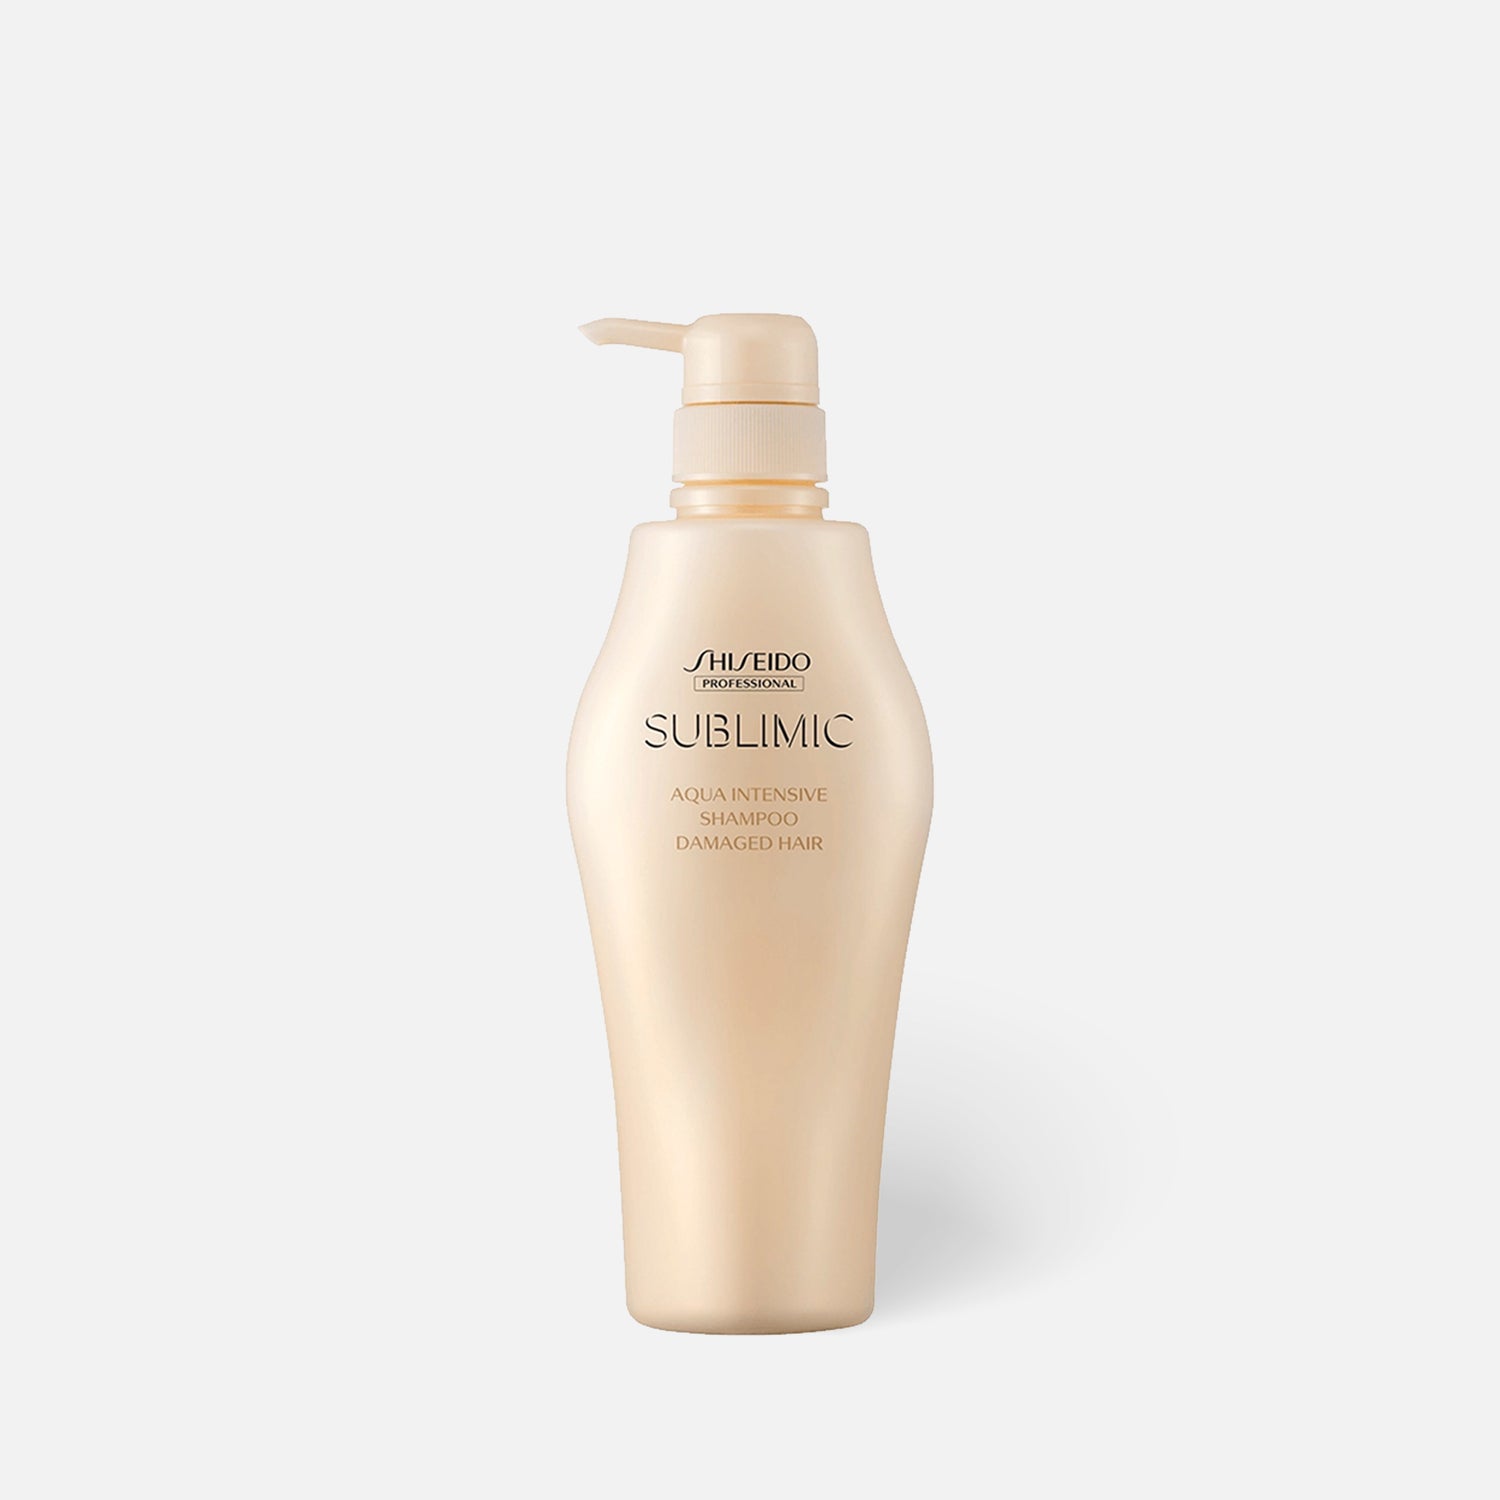 SHISEIDO Aqua Intensive Shampoo 500ml